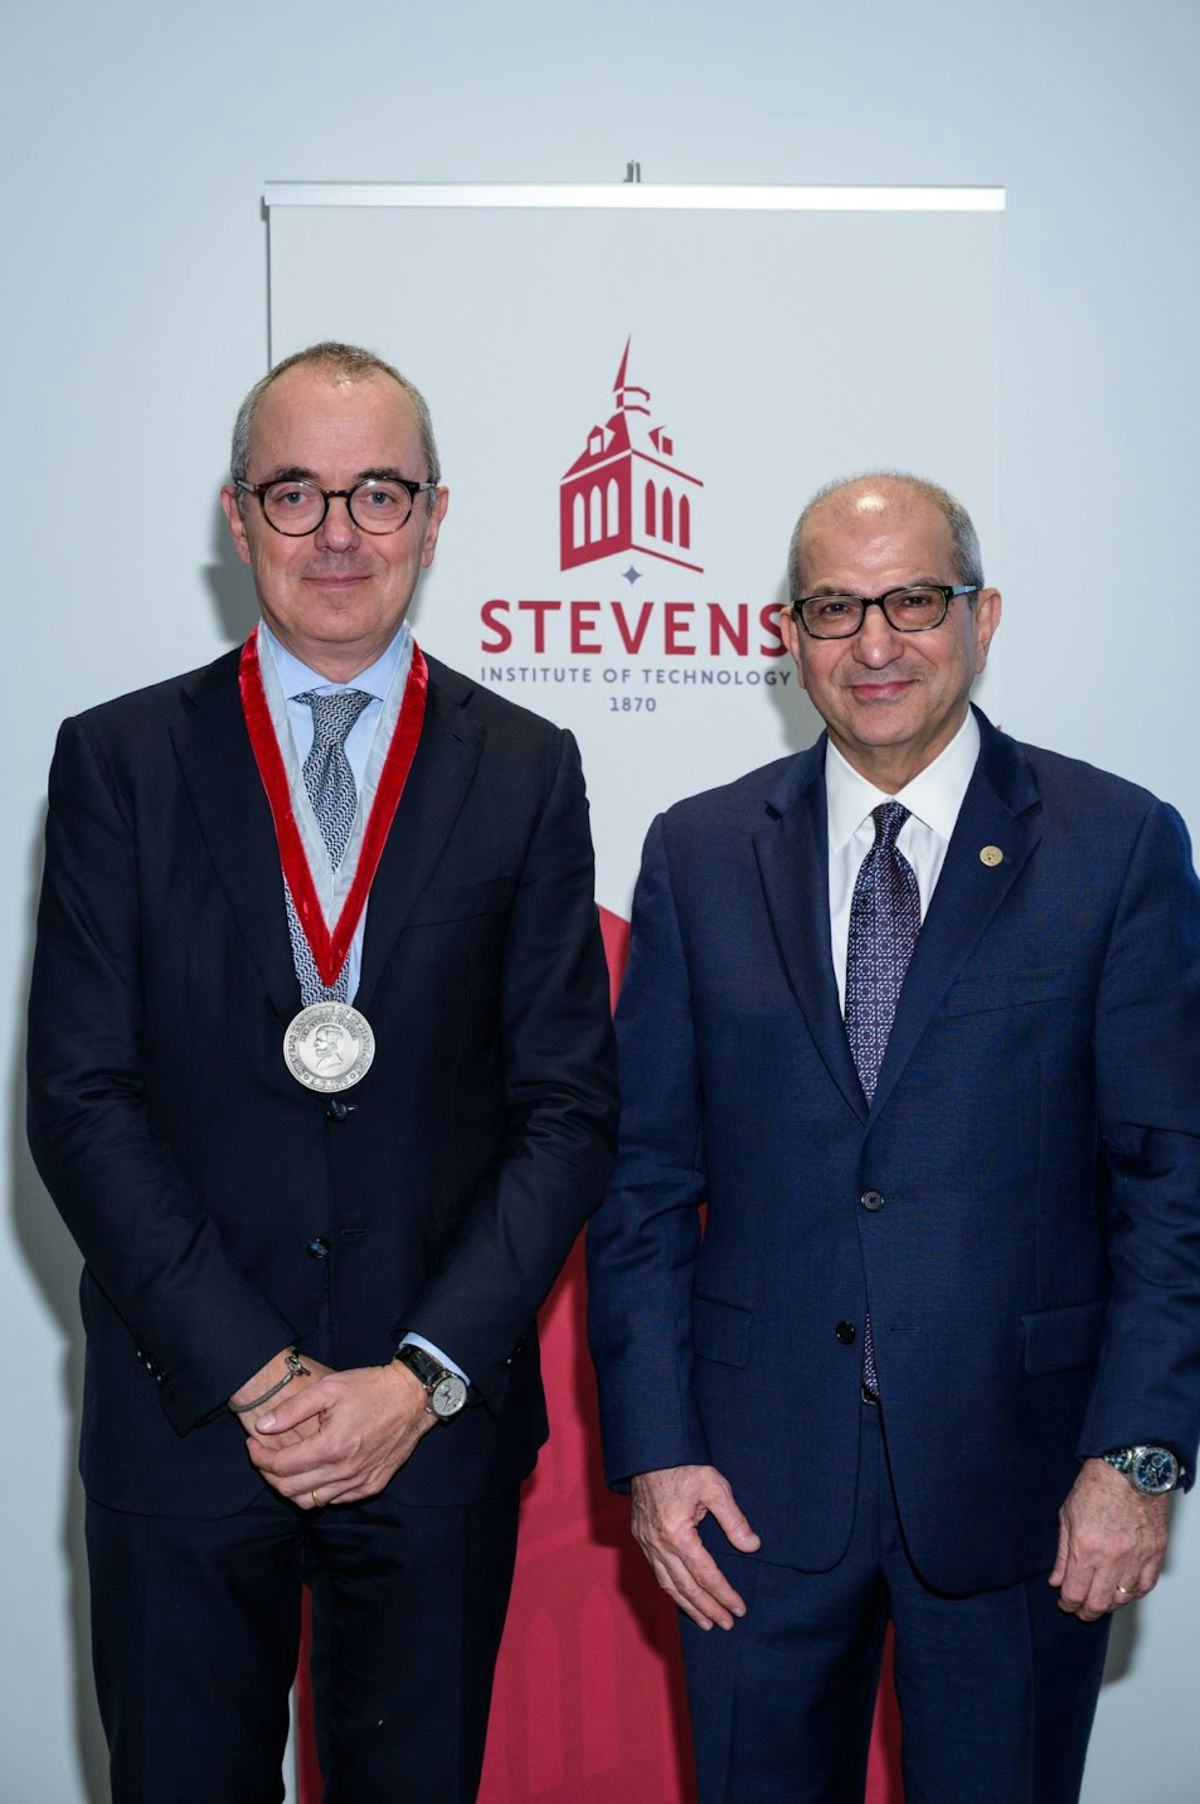 Giovanni Caforio receives a medal from Stevens President Nariman Farvardin